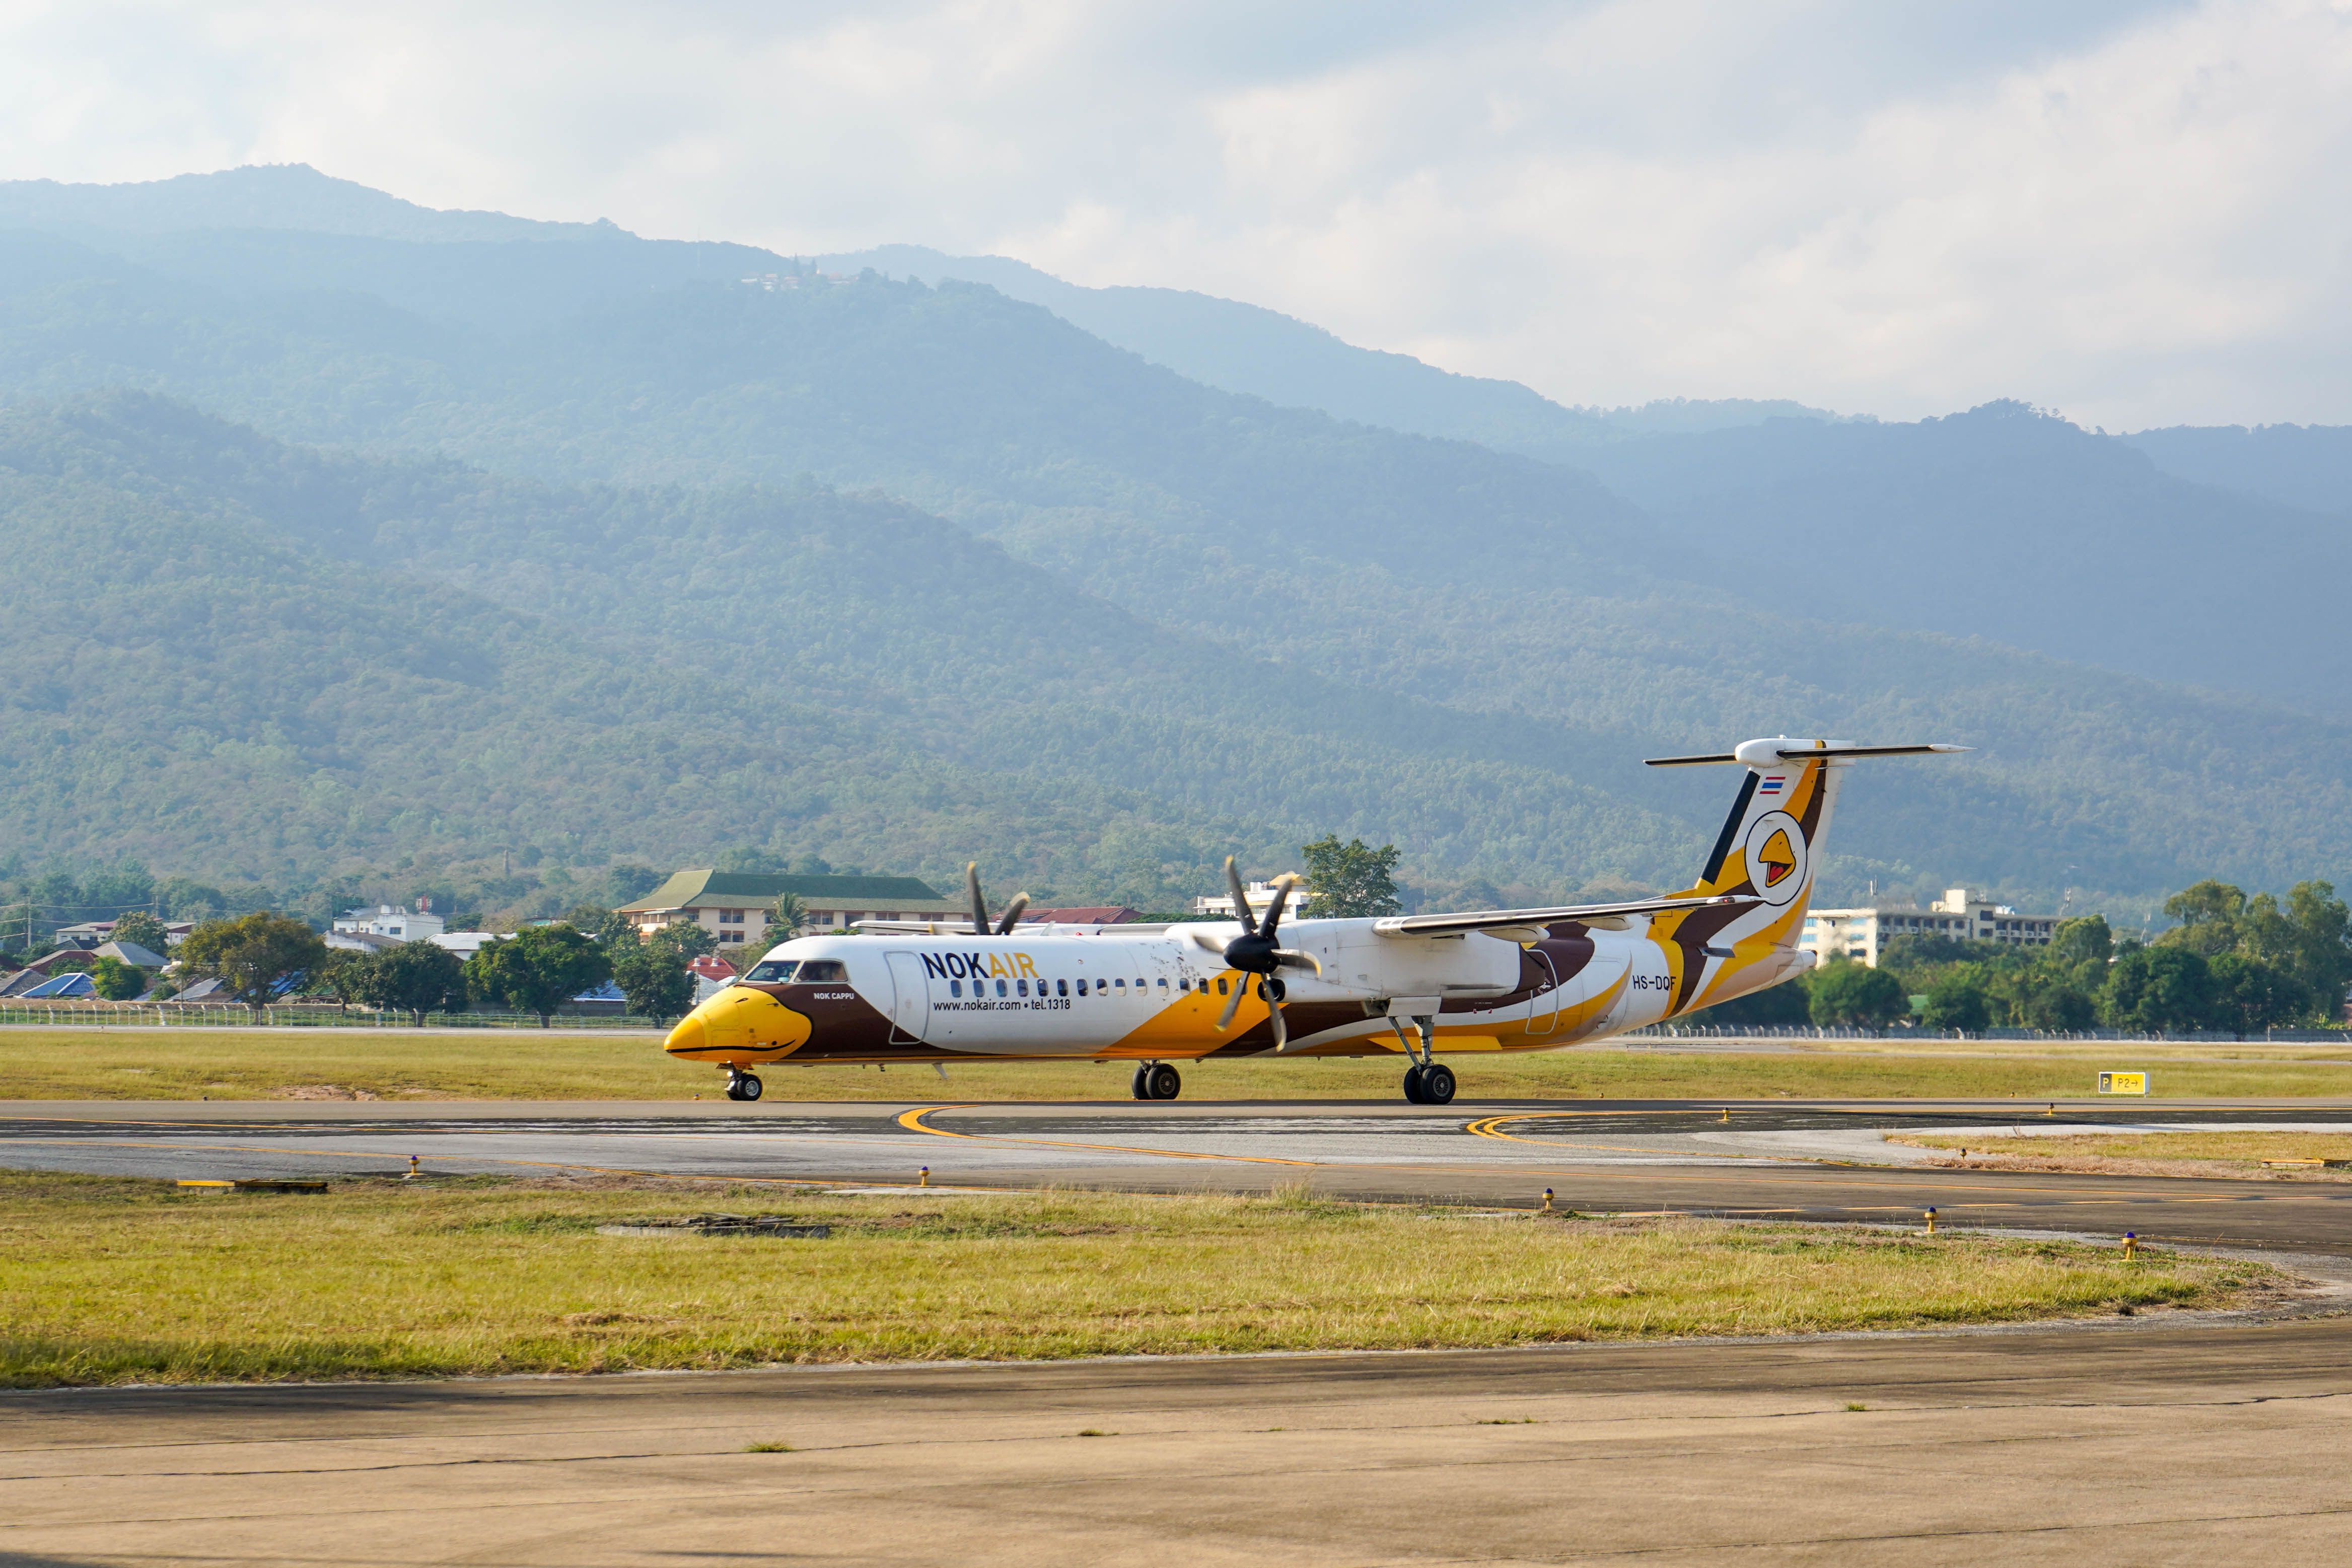 Nok Air Bombardier Dash-8 Q400 landing at Chiang Mai international airport.